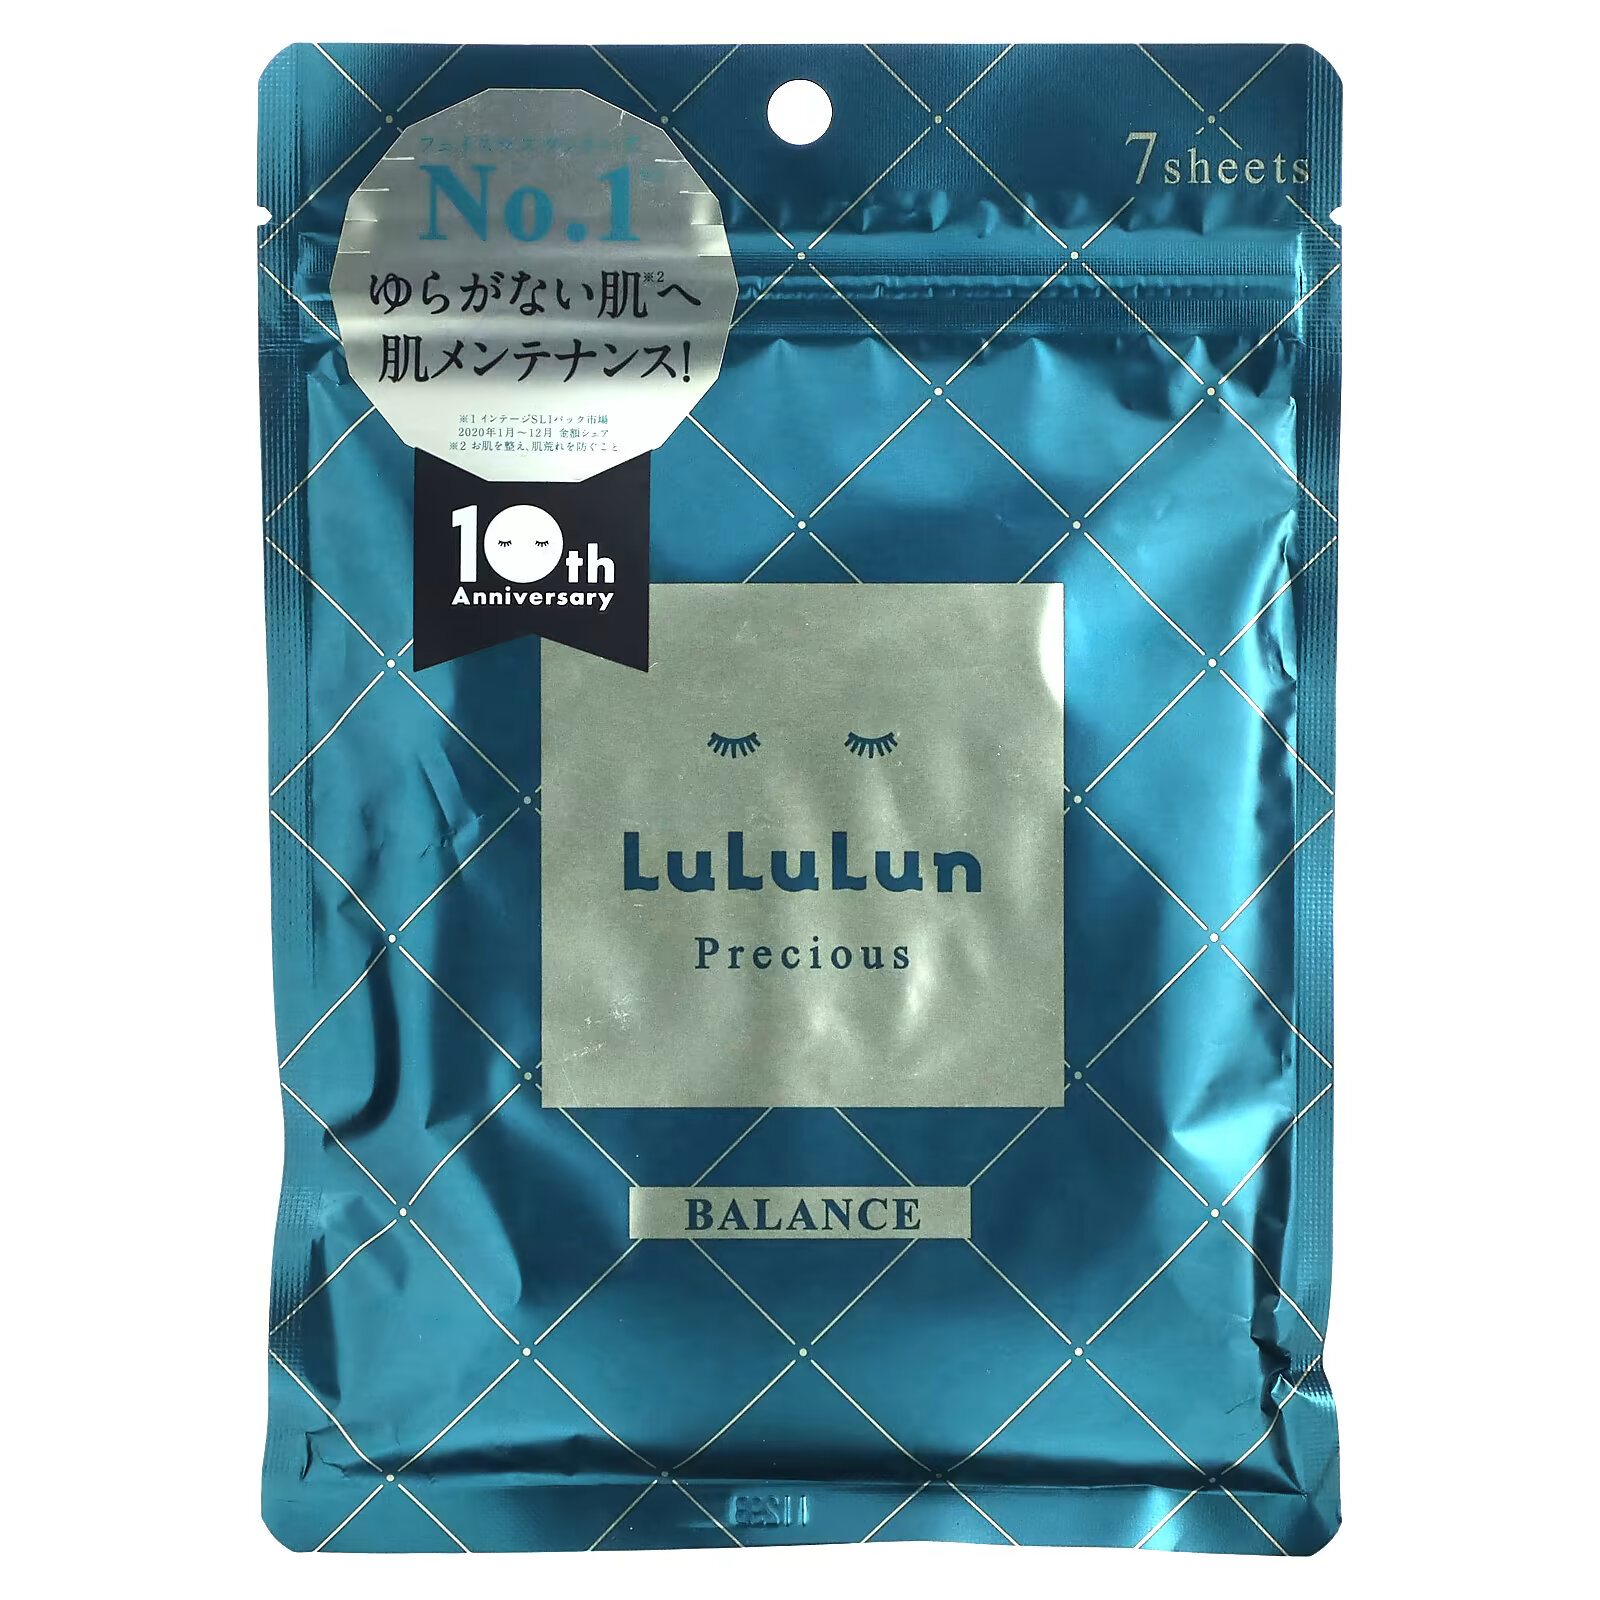 цена Lululun, Precious Balance, Beauty Sheet Mask, зеленая 4KS, 7 шт., 108 мл (3,65 жидк. Унции)